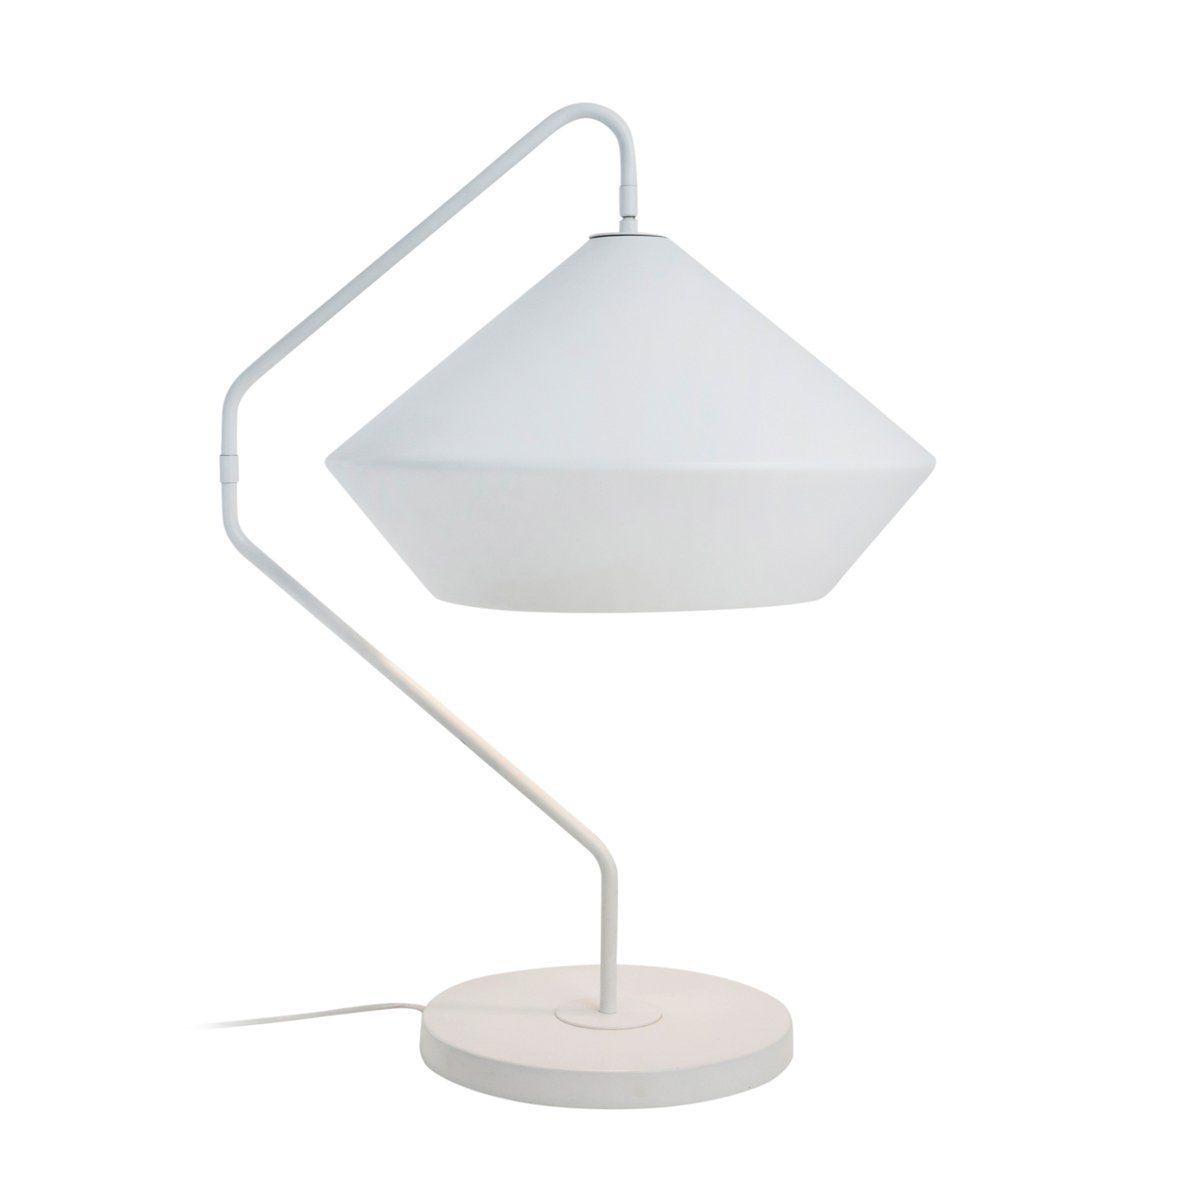 Lampe design SIGNATURE blanc mat en métal et aluminium